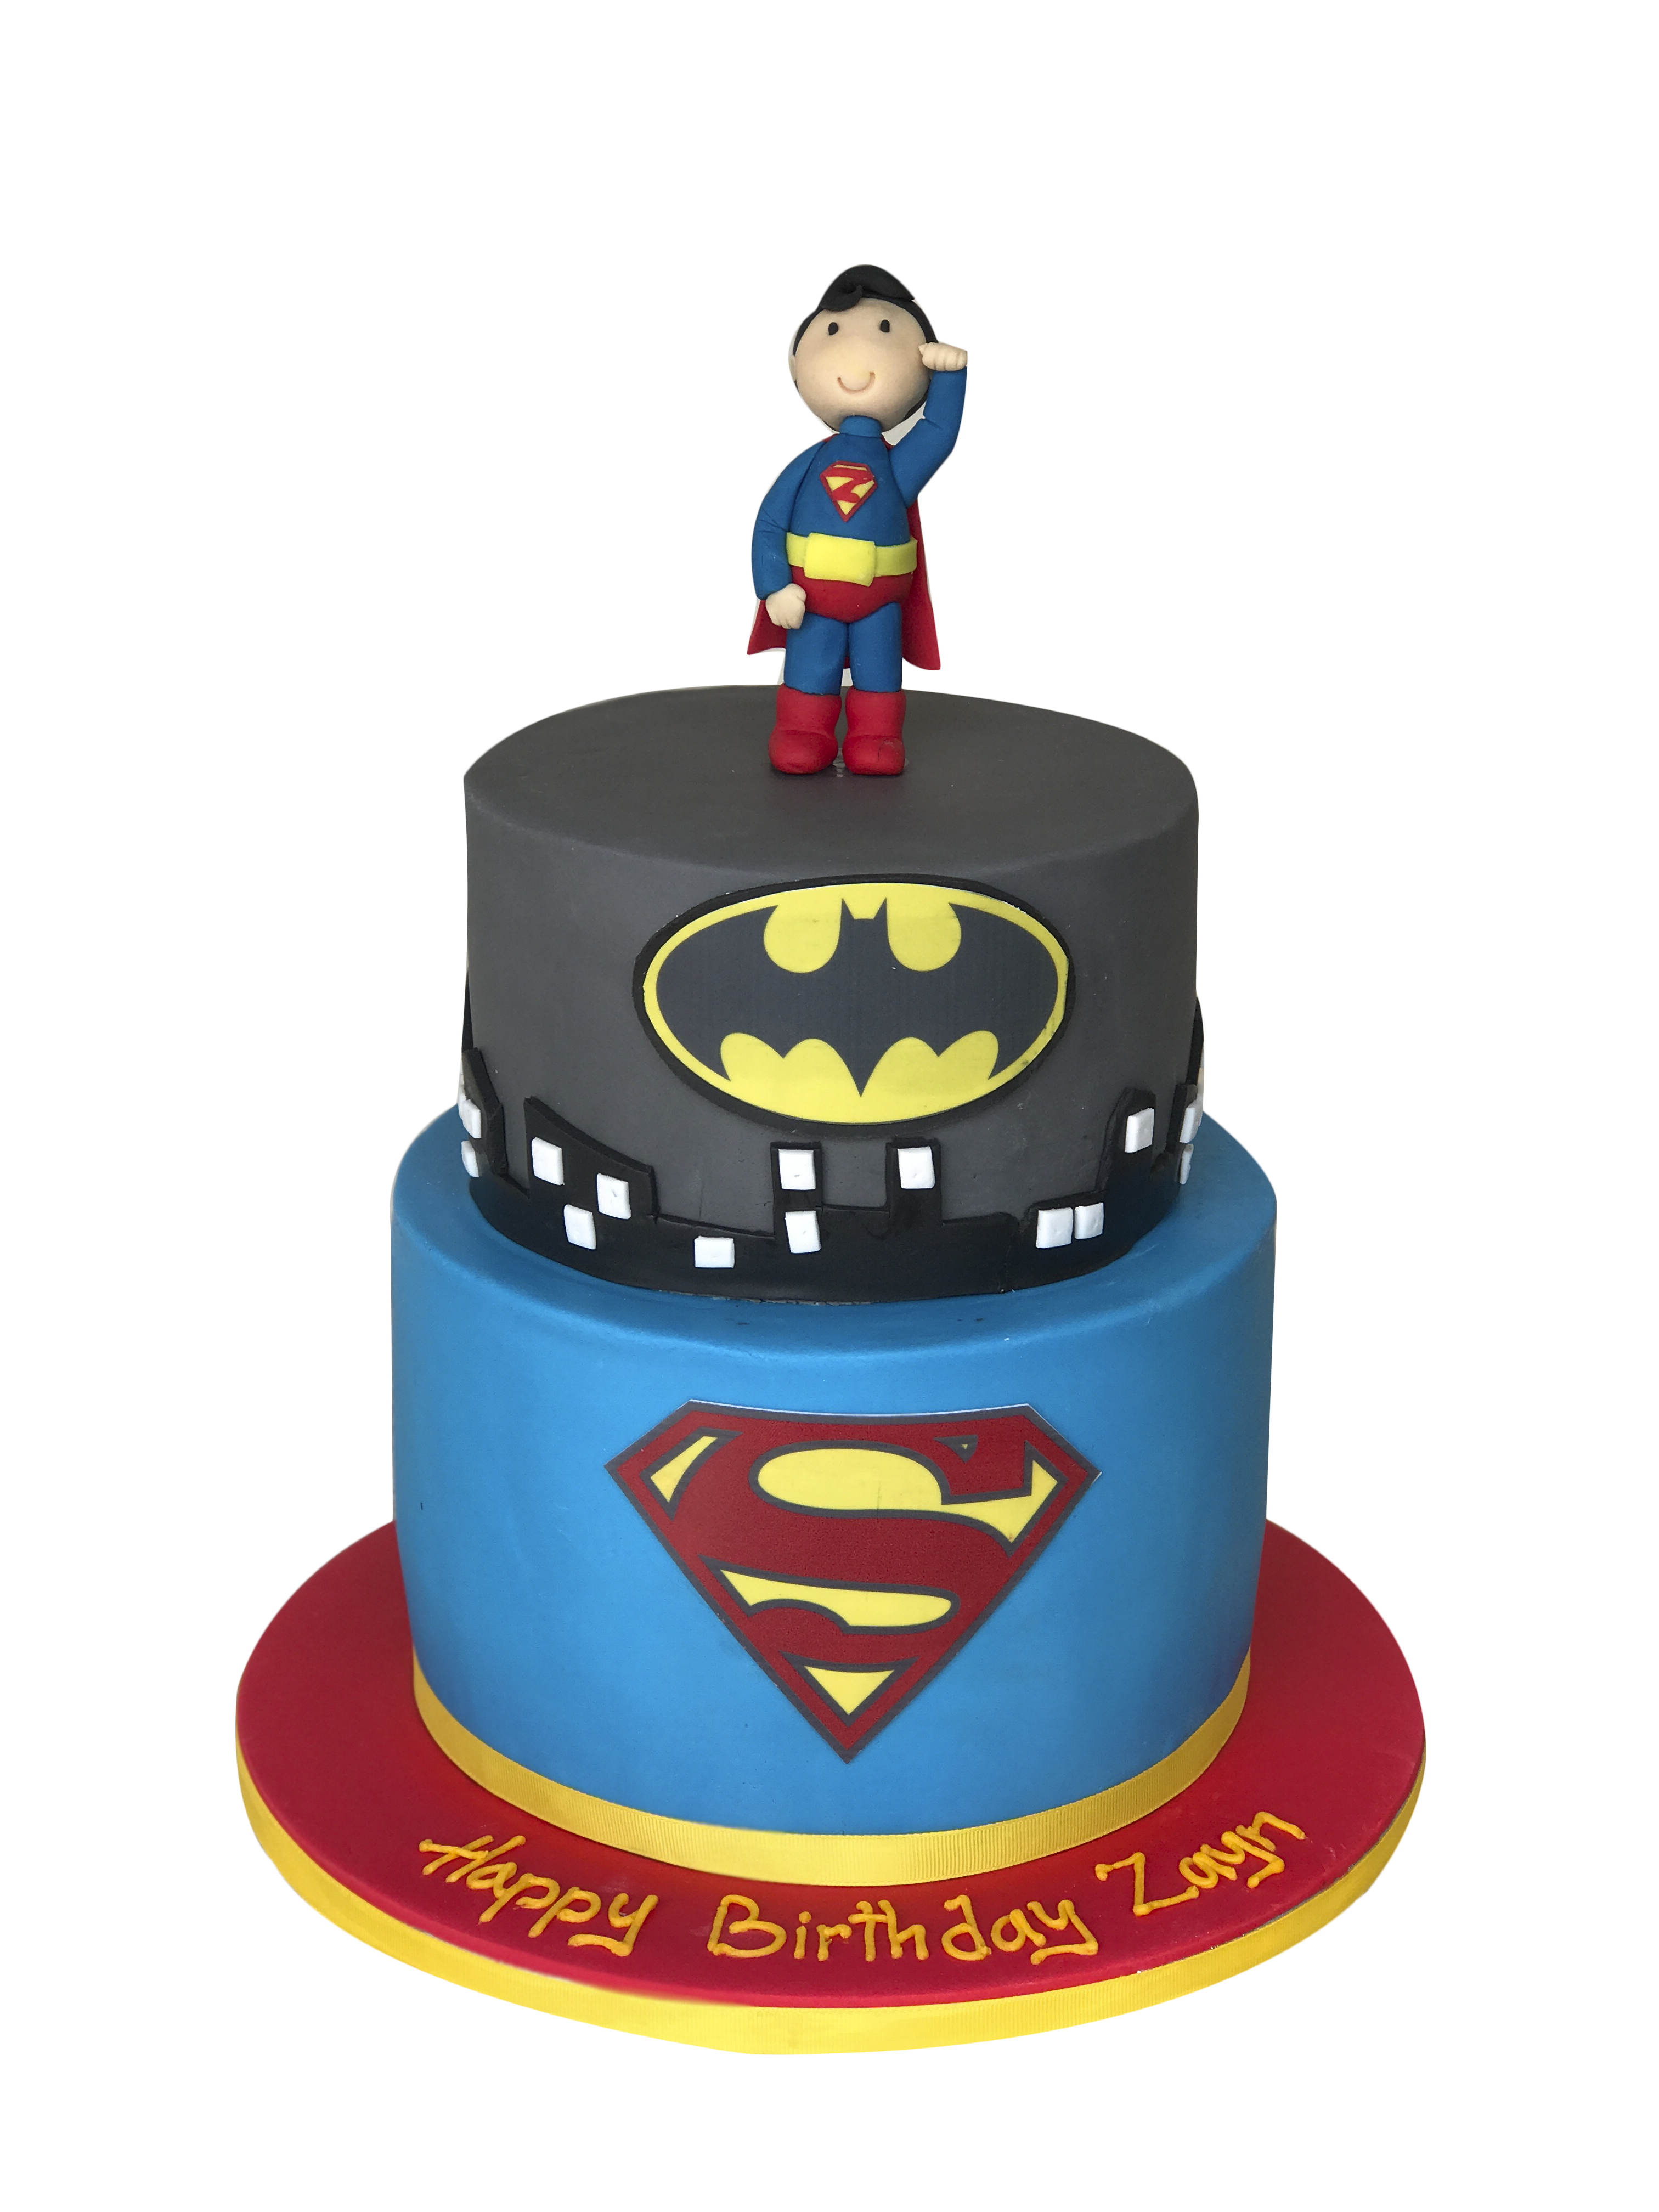 Best Super Cake in Dubai | Superhero Birthday Cakes in Dubai